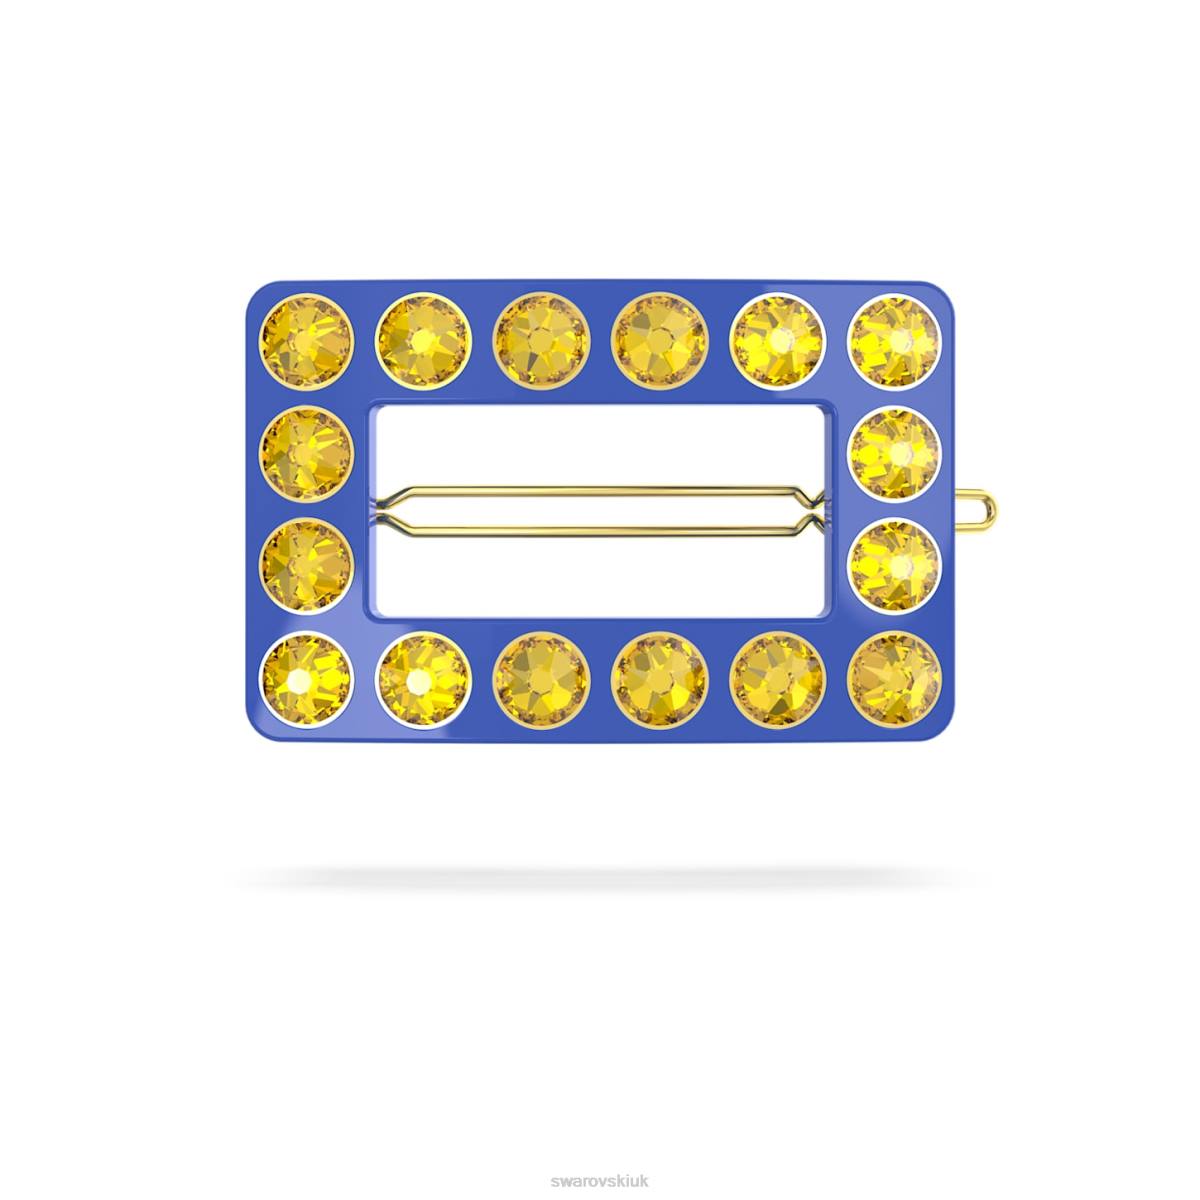 Accessories Swarovski Hair clip Round cut, Rectangular shape, Blue, Gold-tone plated 48JX1474